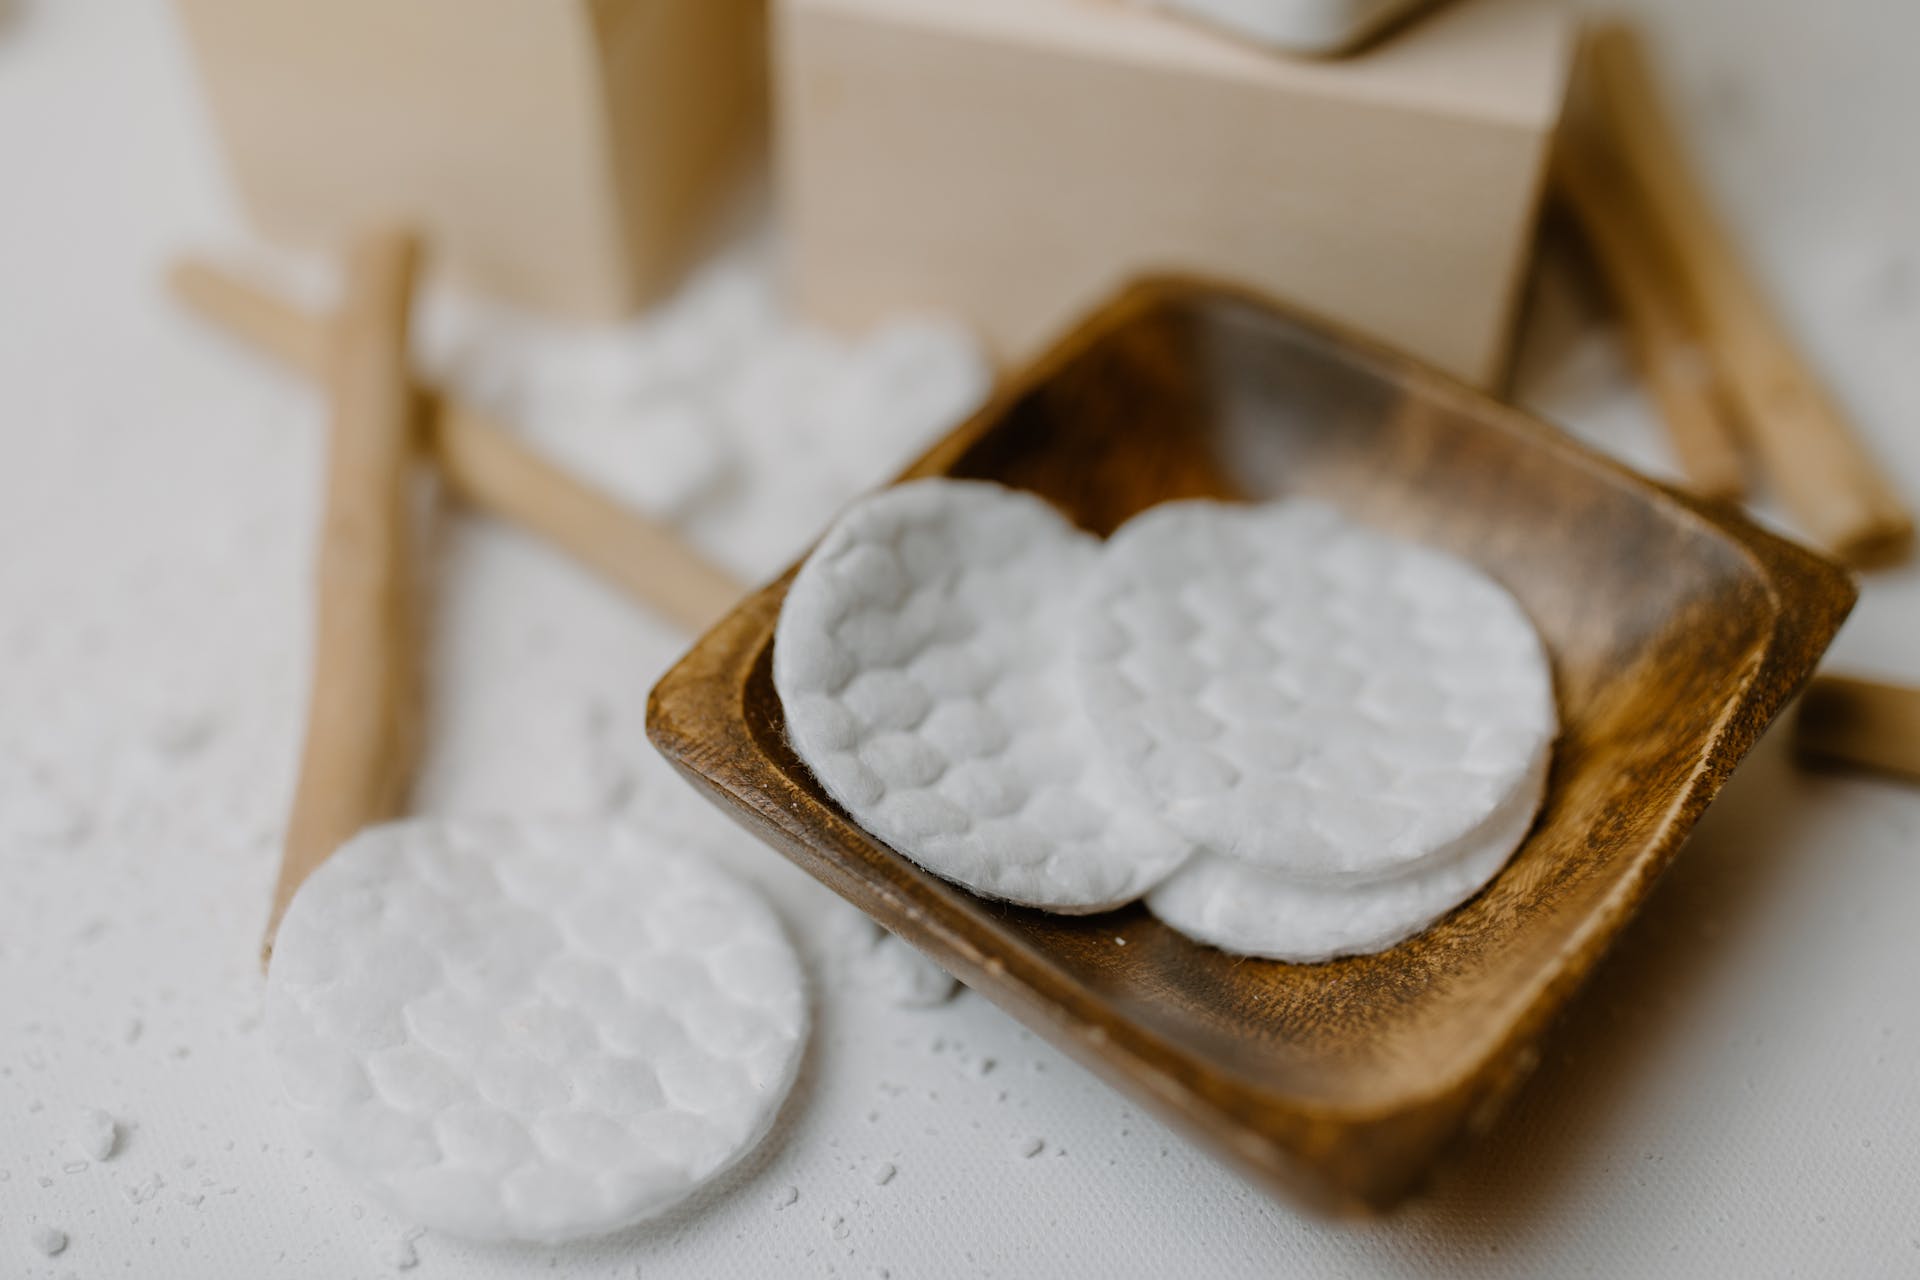 Round cotton pads | Source: Pexels